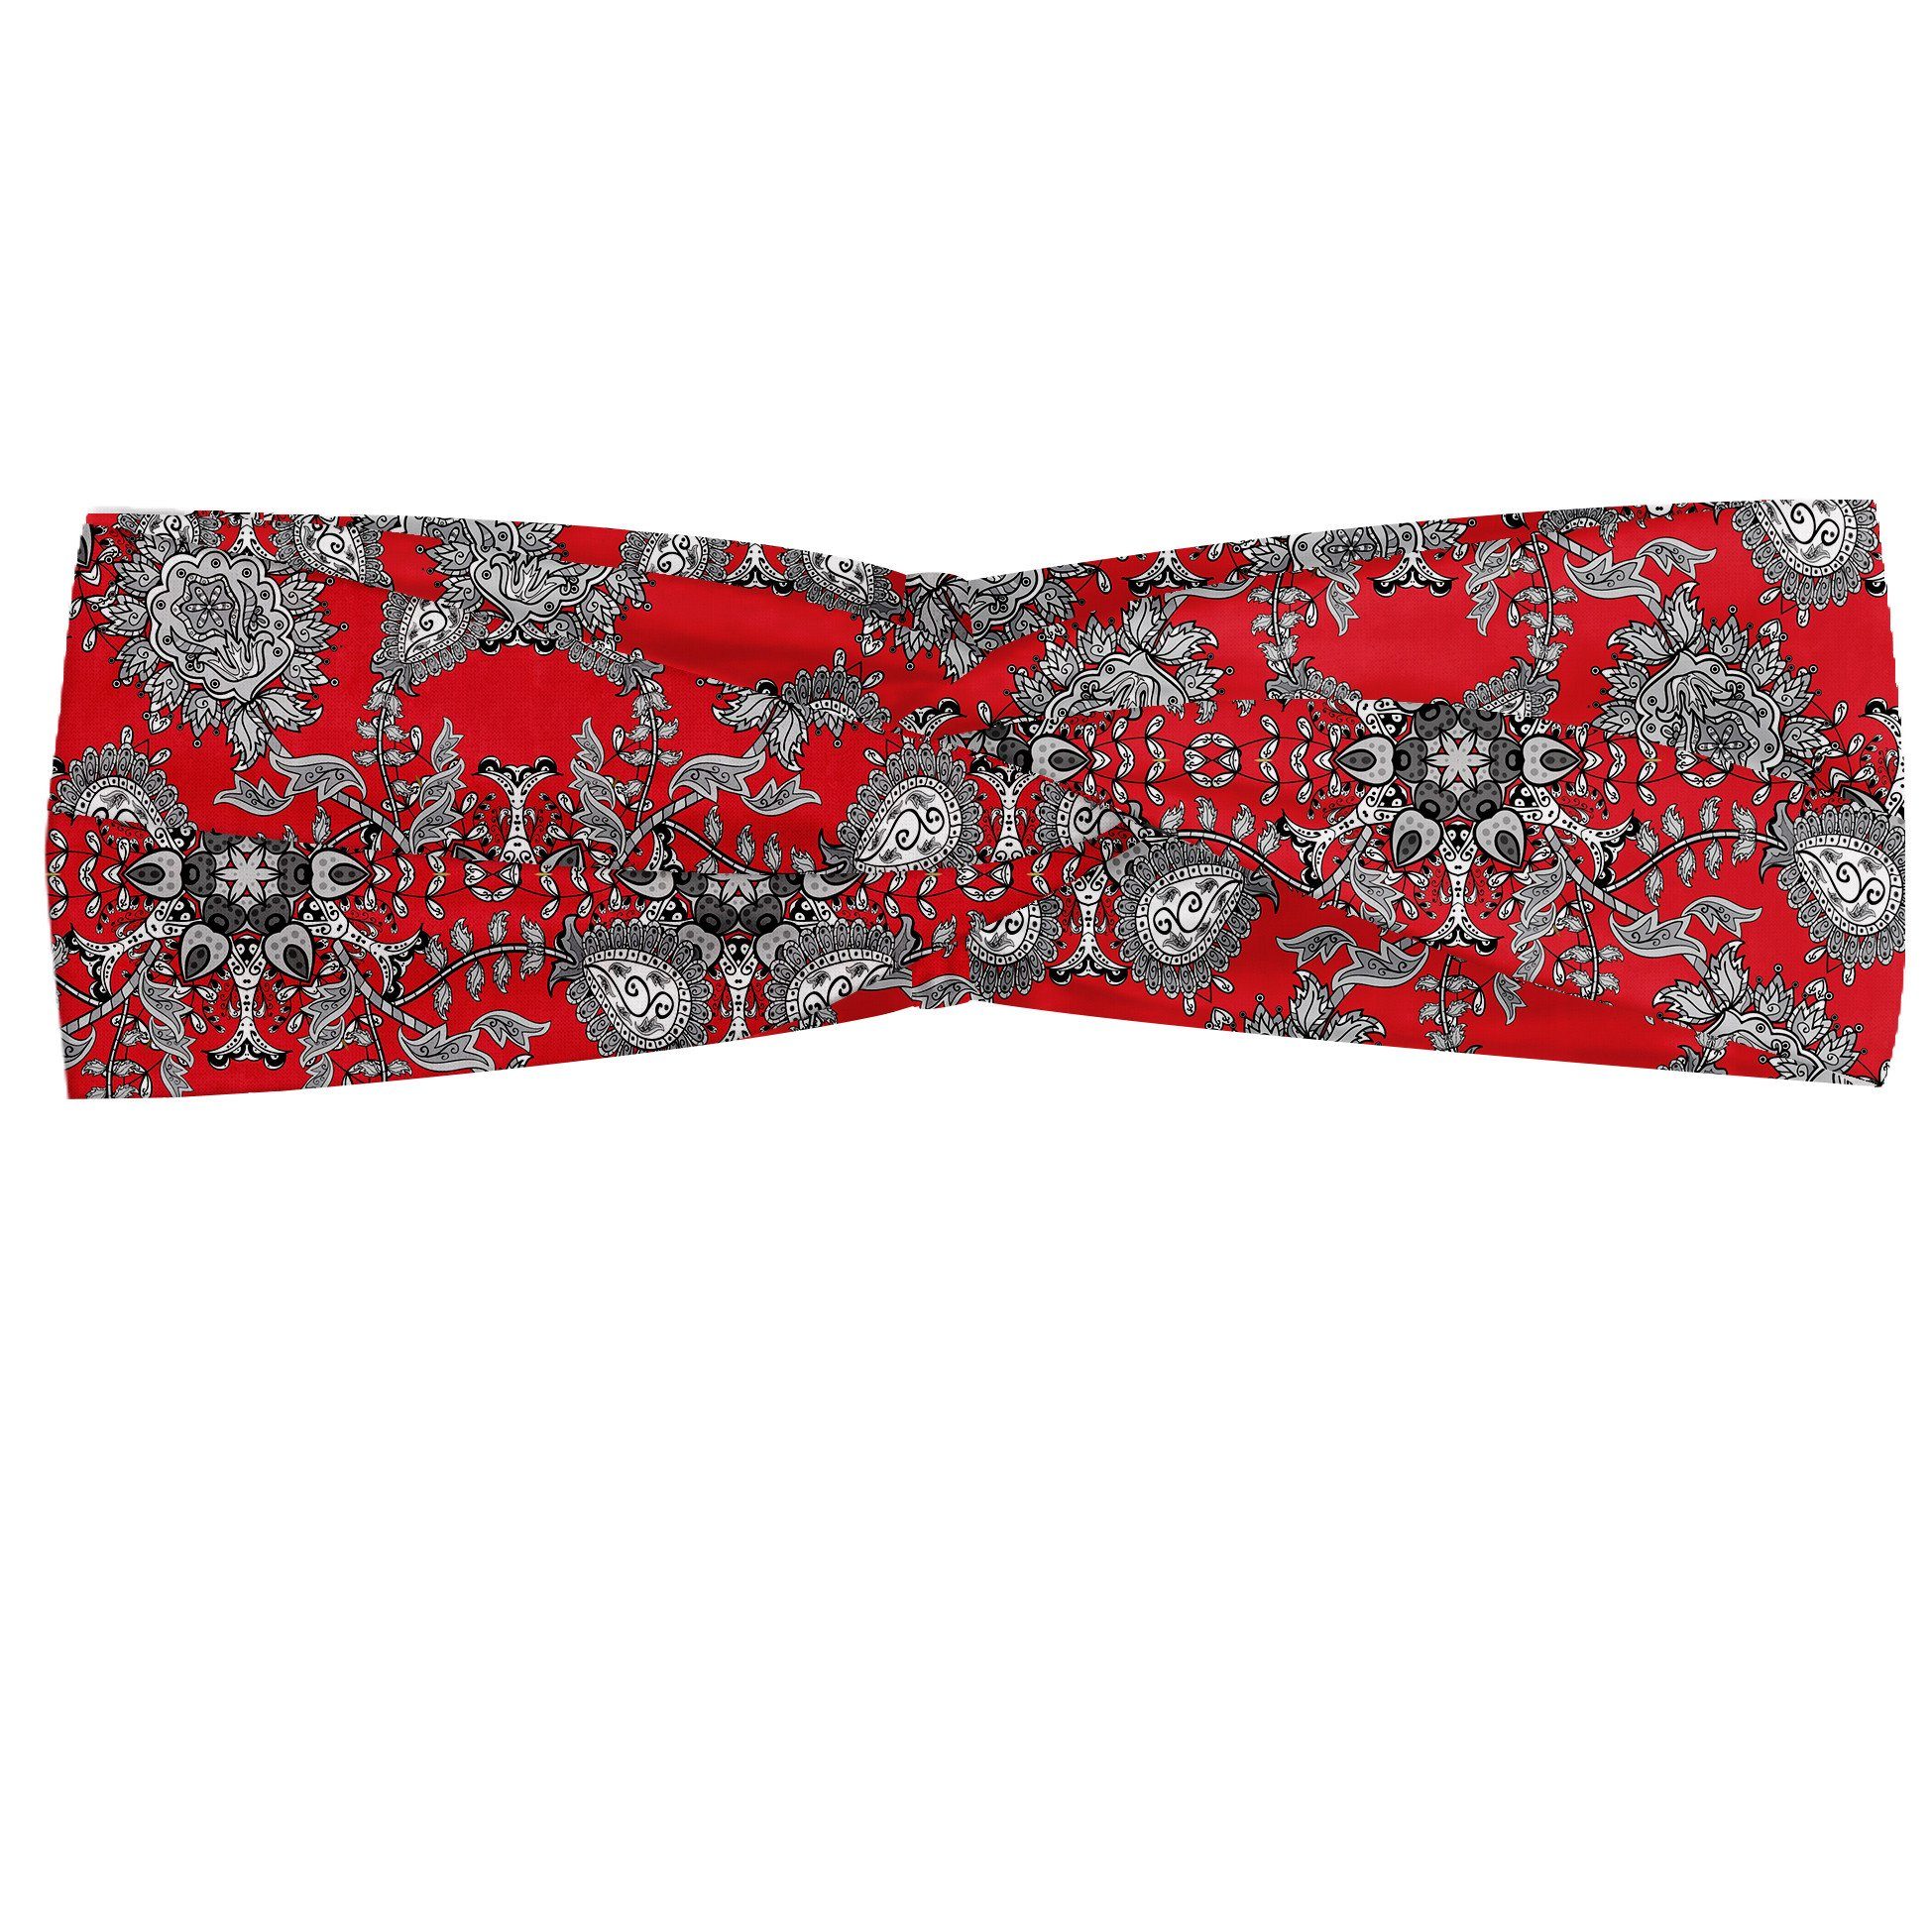 Abakuhaus Stirnband Elastisch und Angenehme alltags accessories Red Mandala Paisley Doodle